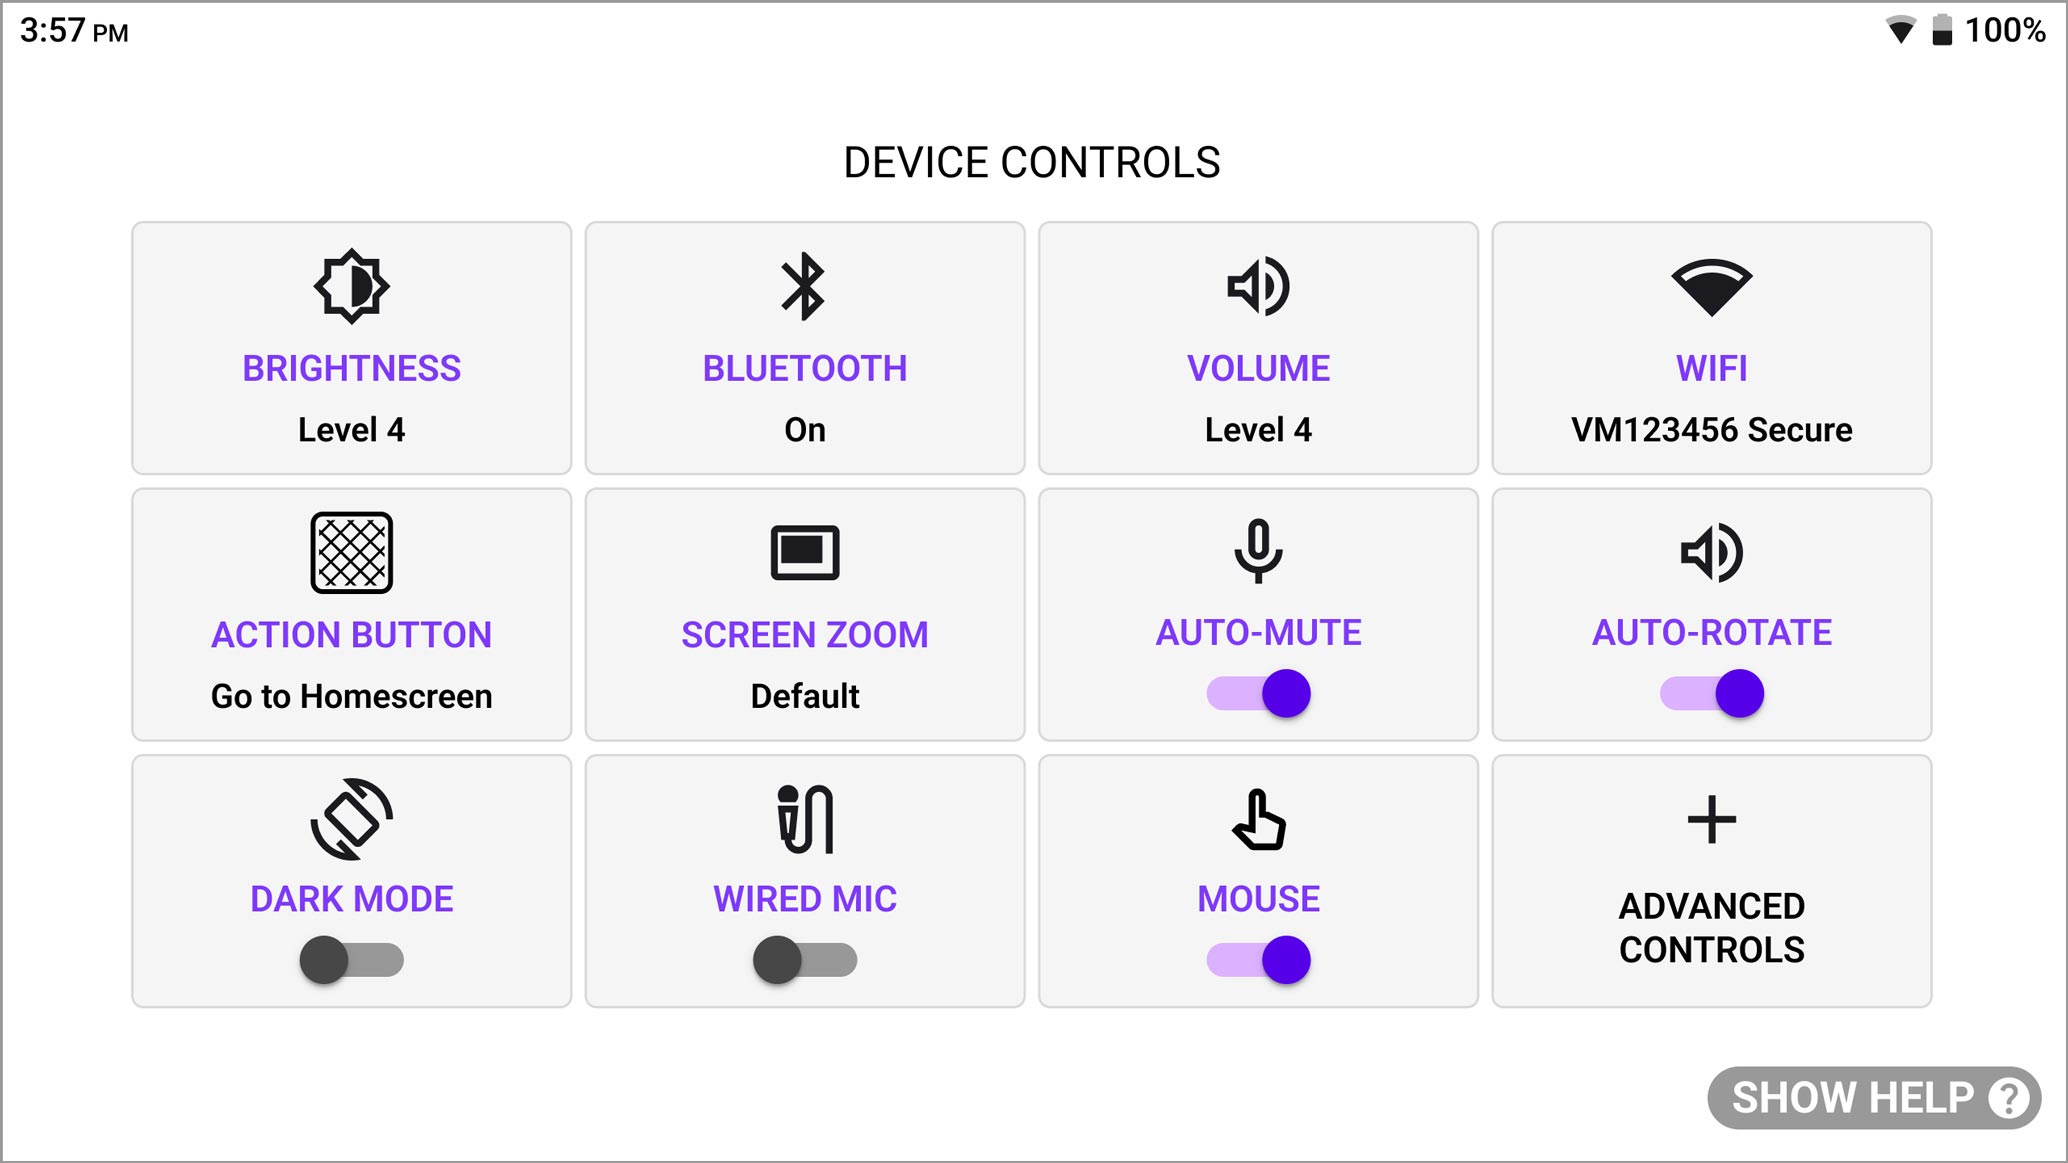 Device controls